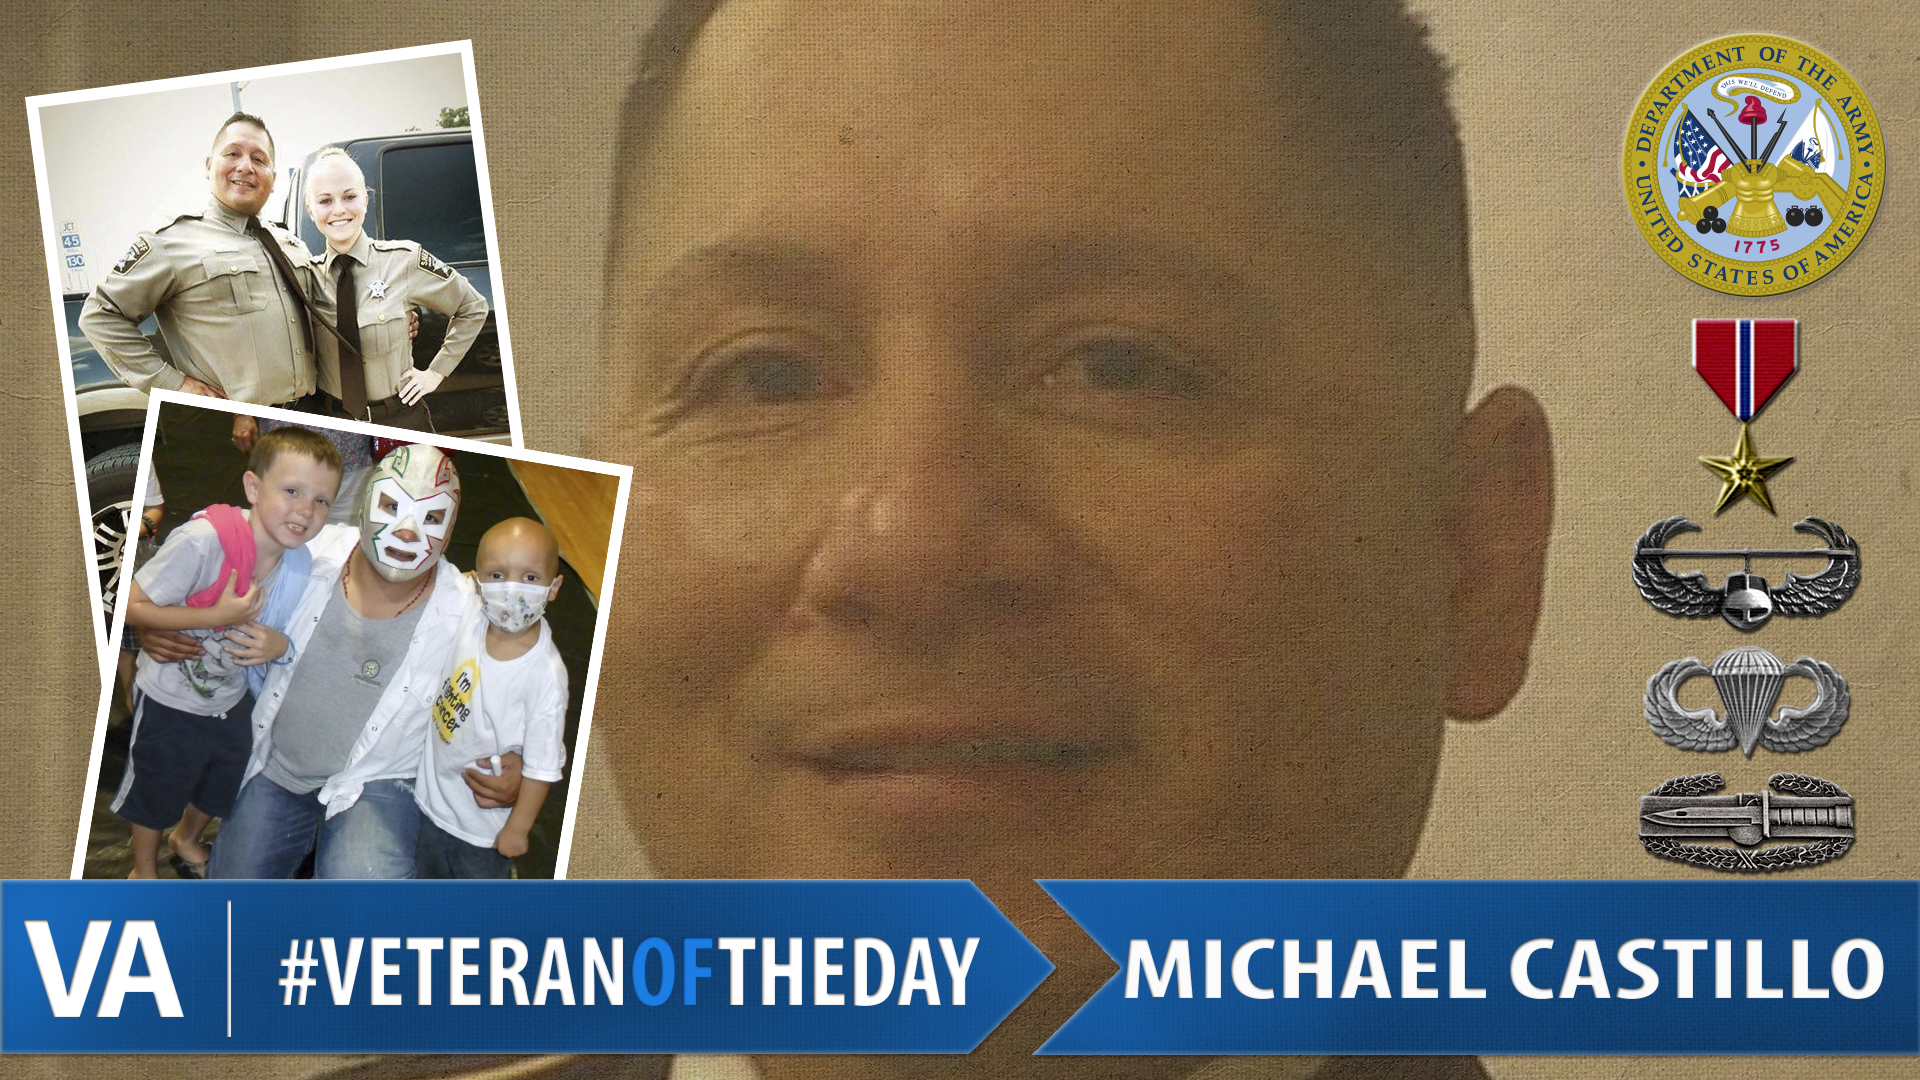 Veteran of the day Michael Castillo.